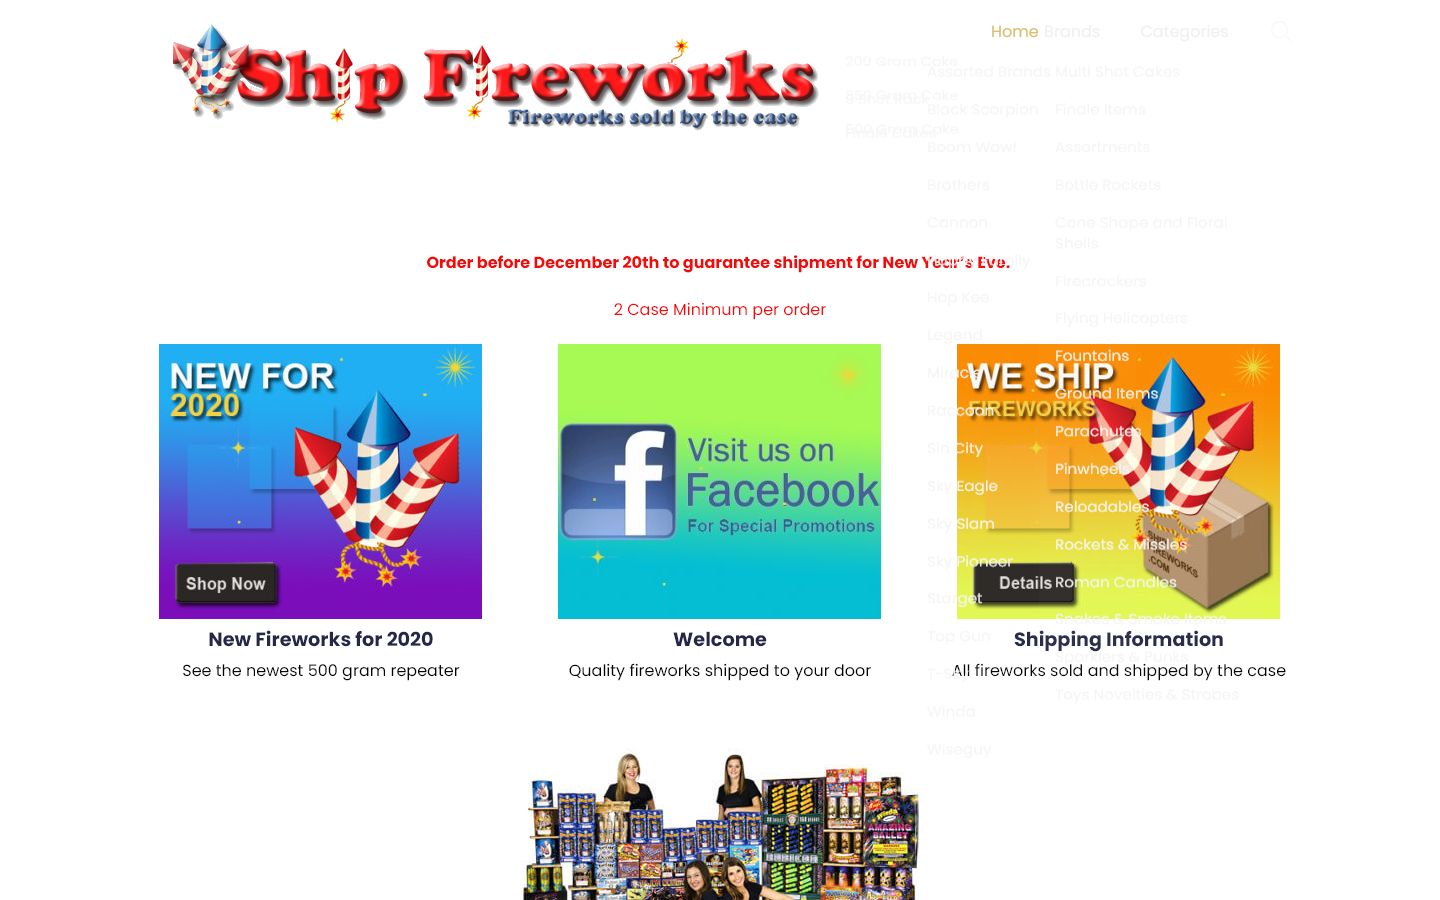 Ship Fireworks